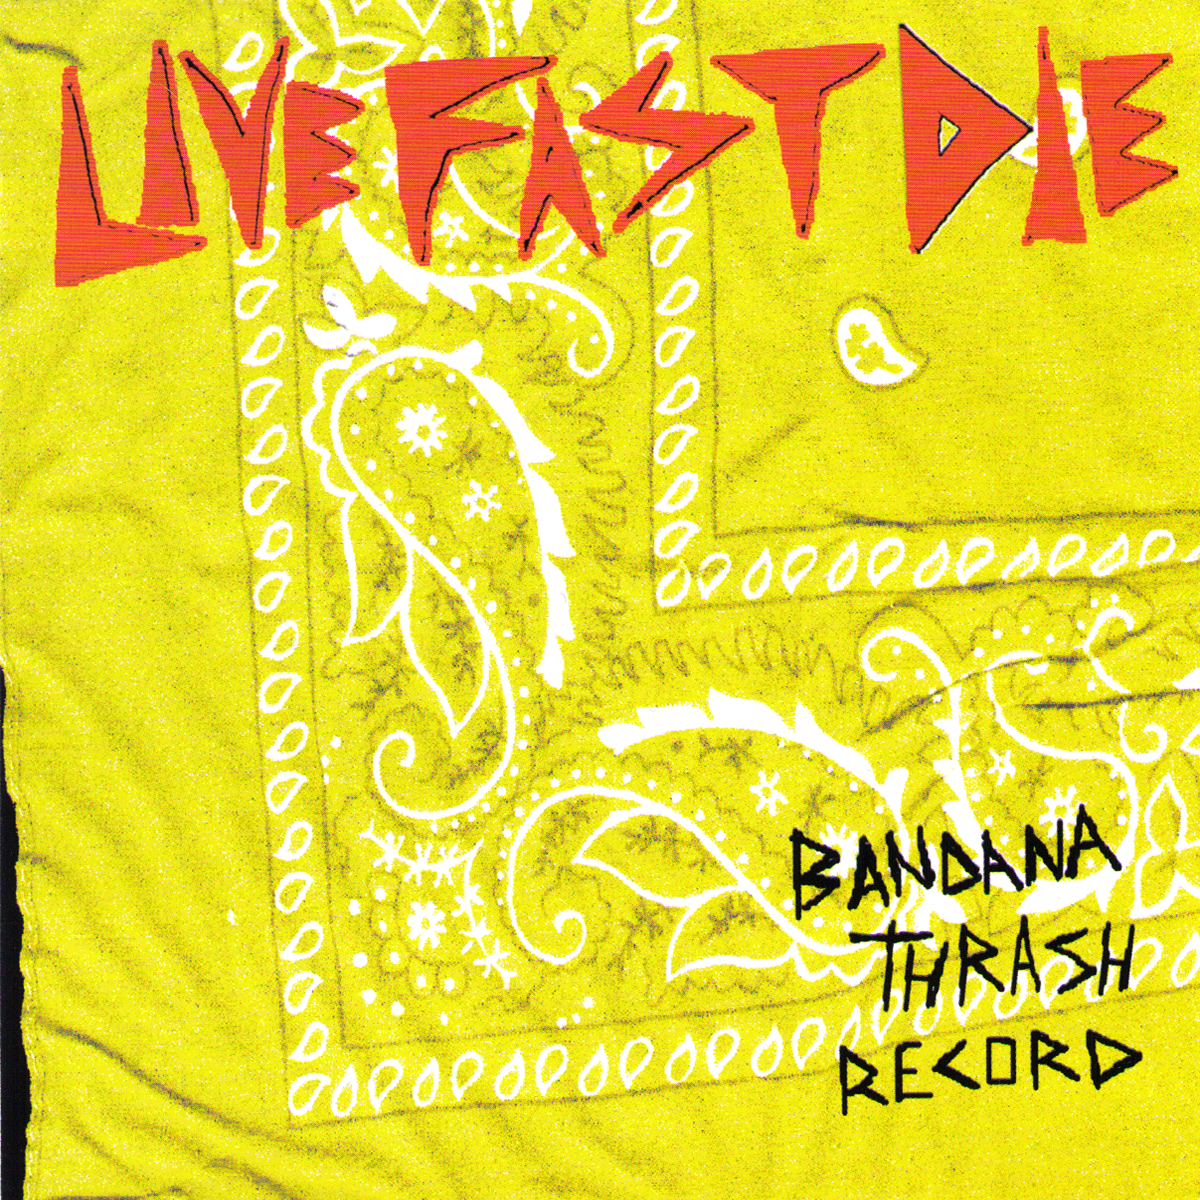 Live Fast Die- Bandana Thrash Record CD ~GG ALLIN!